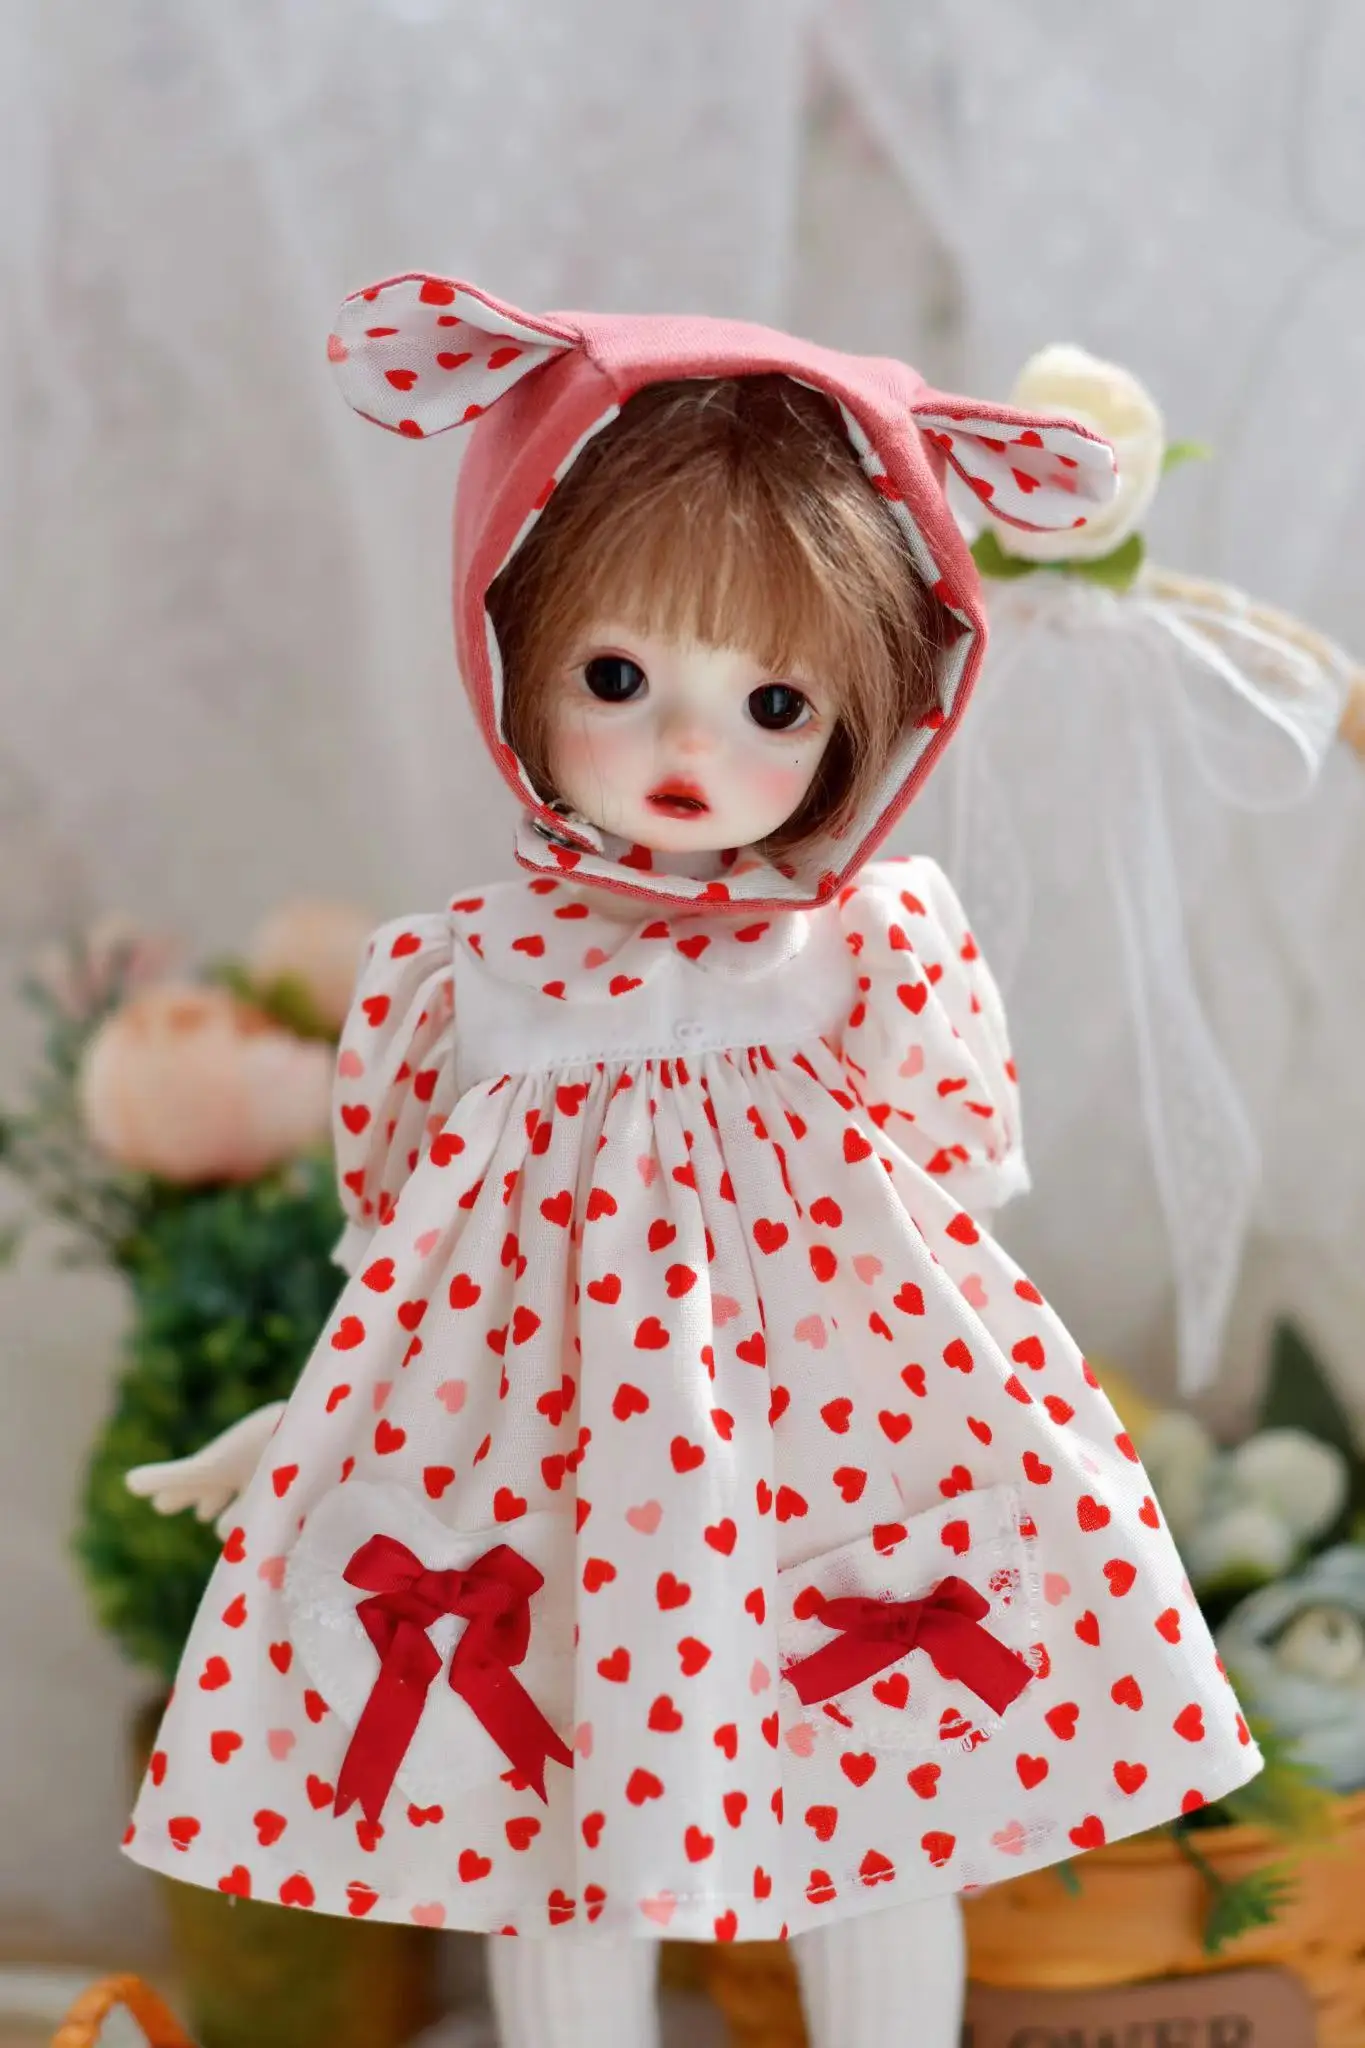 1/6 30cm Bjd שמלת בובה בצורת לב ורוד להתלבש בגדי צעצועים (מתאים 1/6 בובה אביזרים）